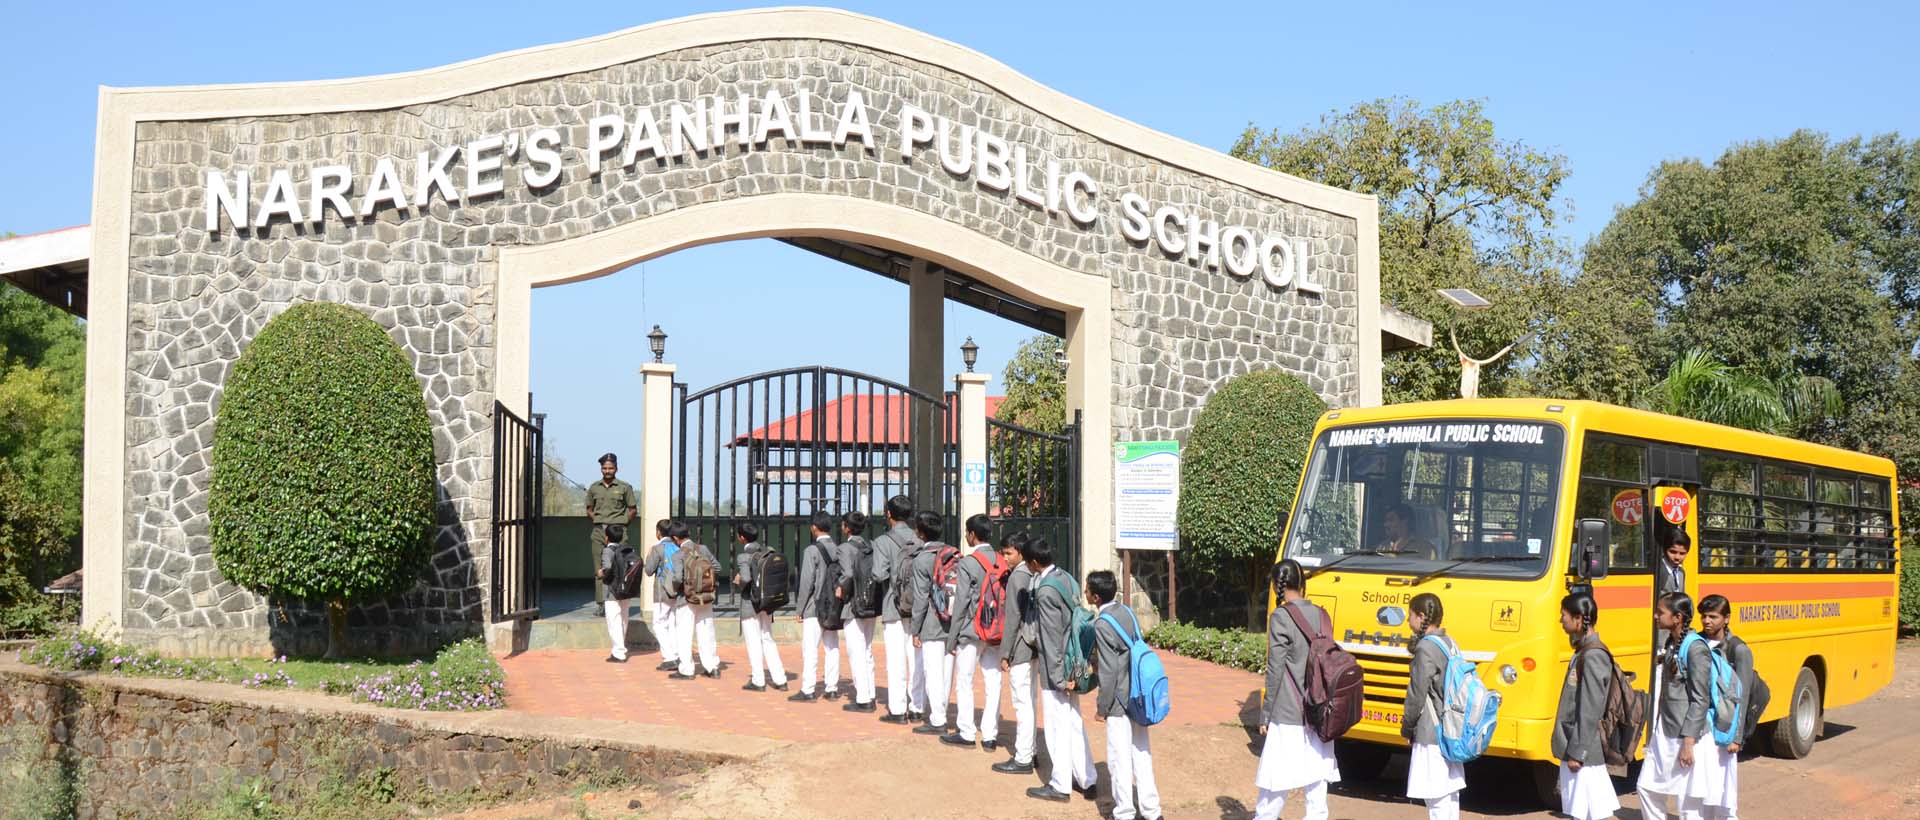 NARAKE'S PANHALA PUBLIC SCHOOL & DEFENCE ACADEMY